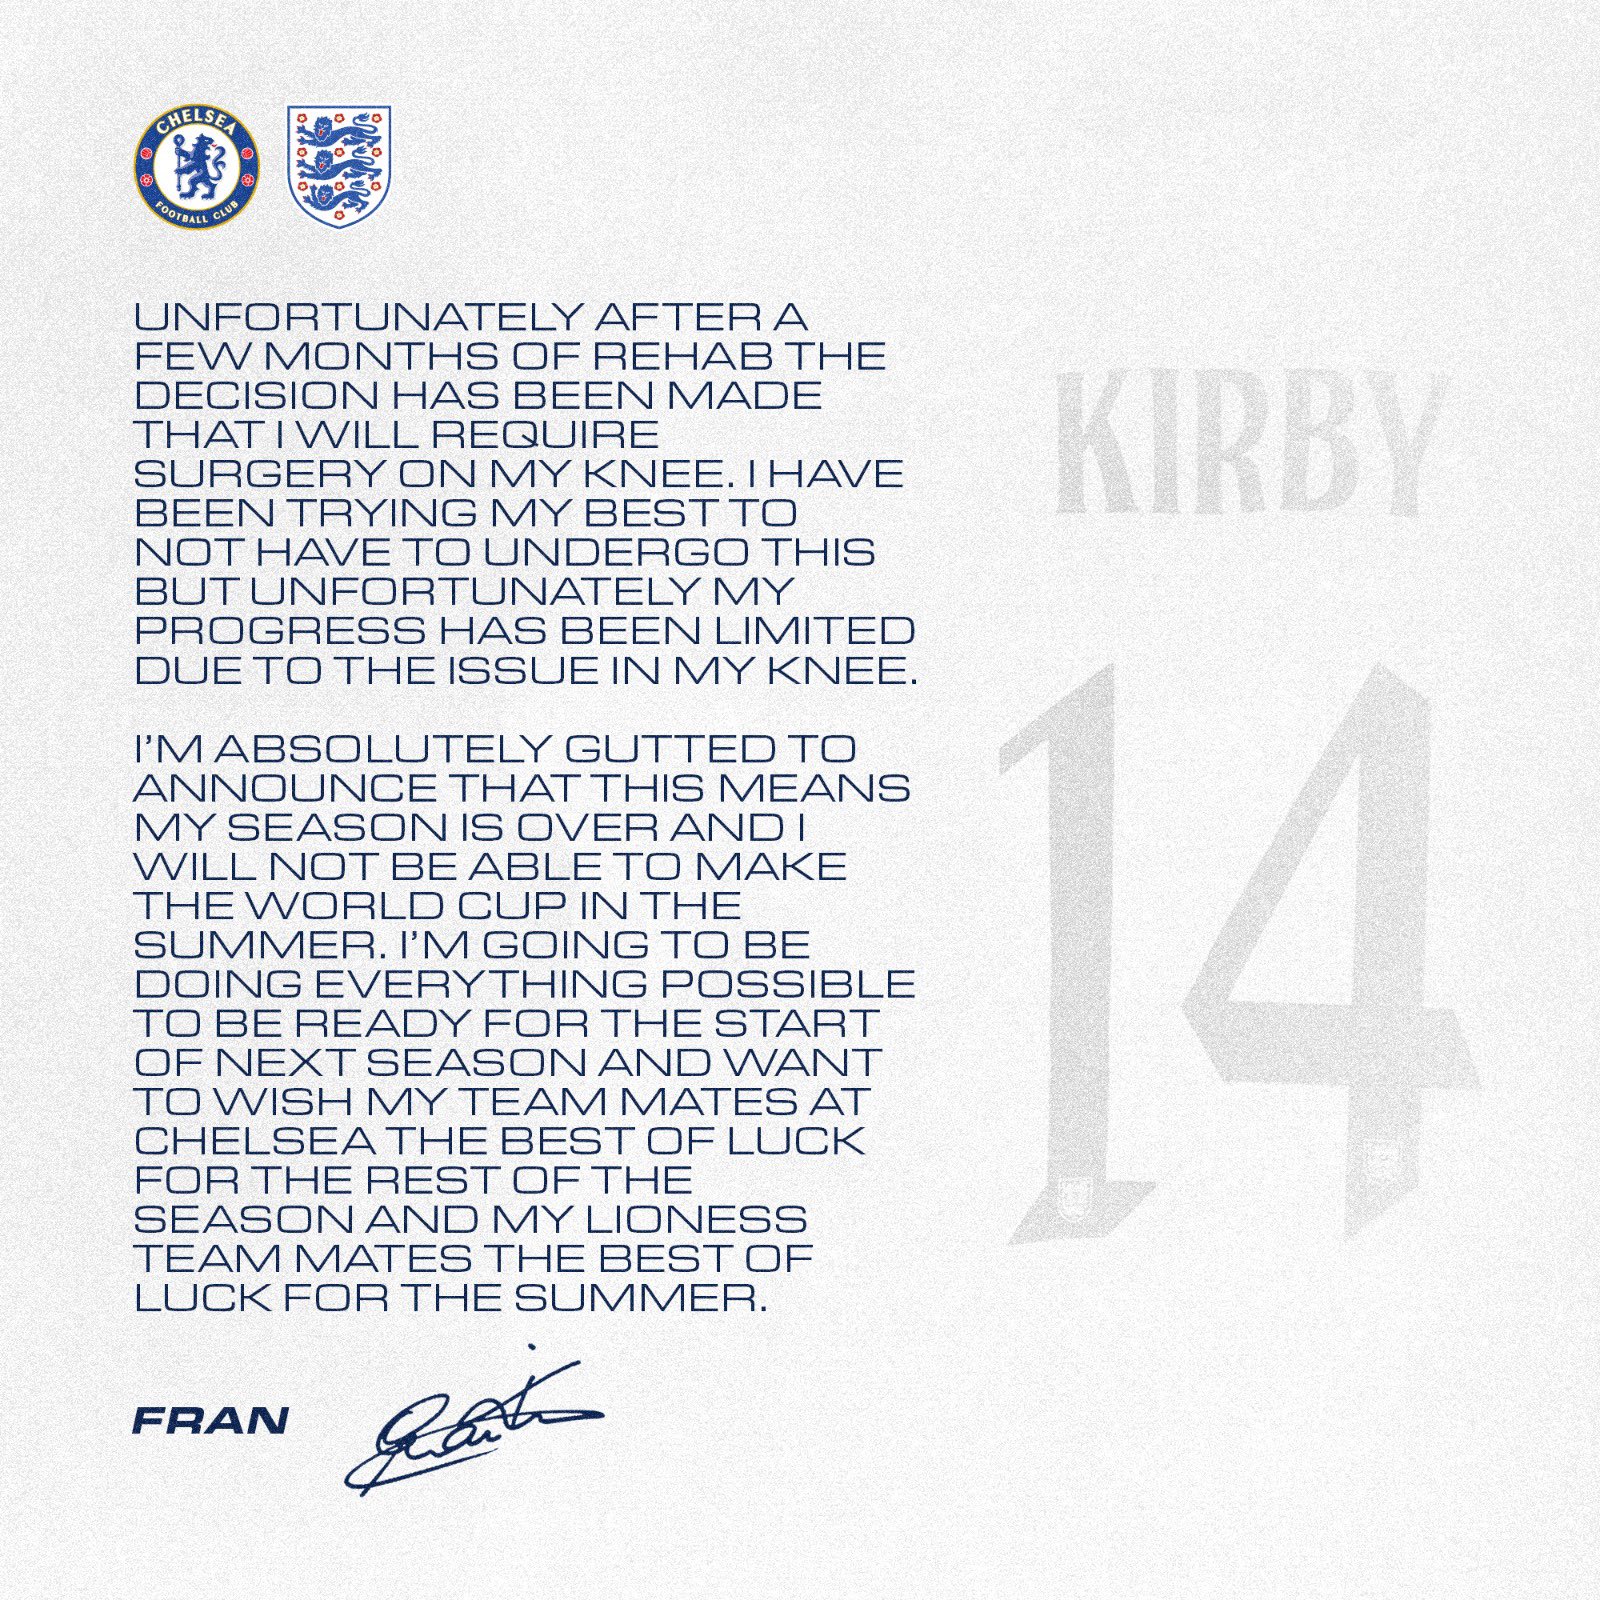 Fran Kirby's statement